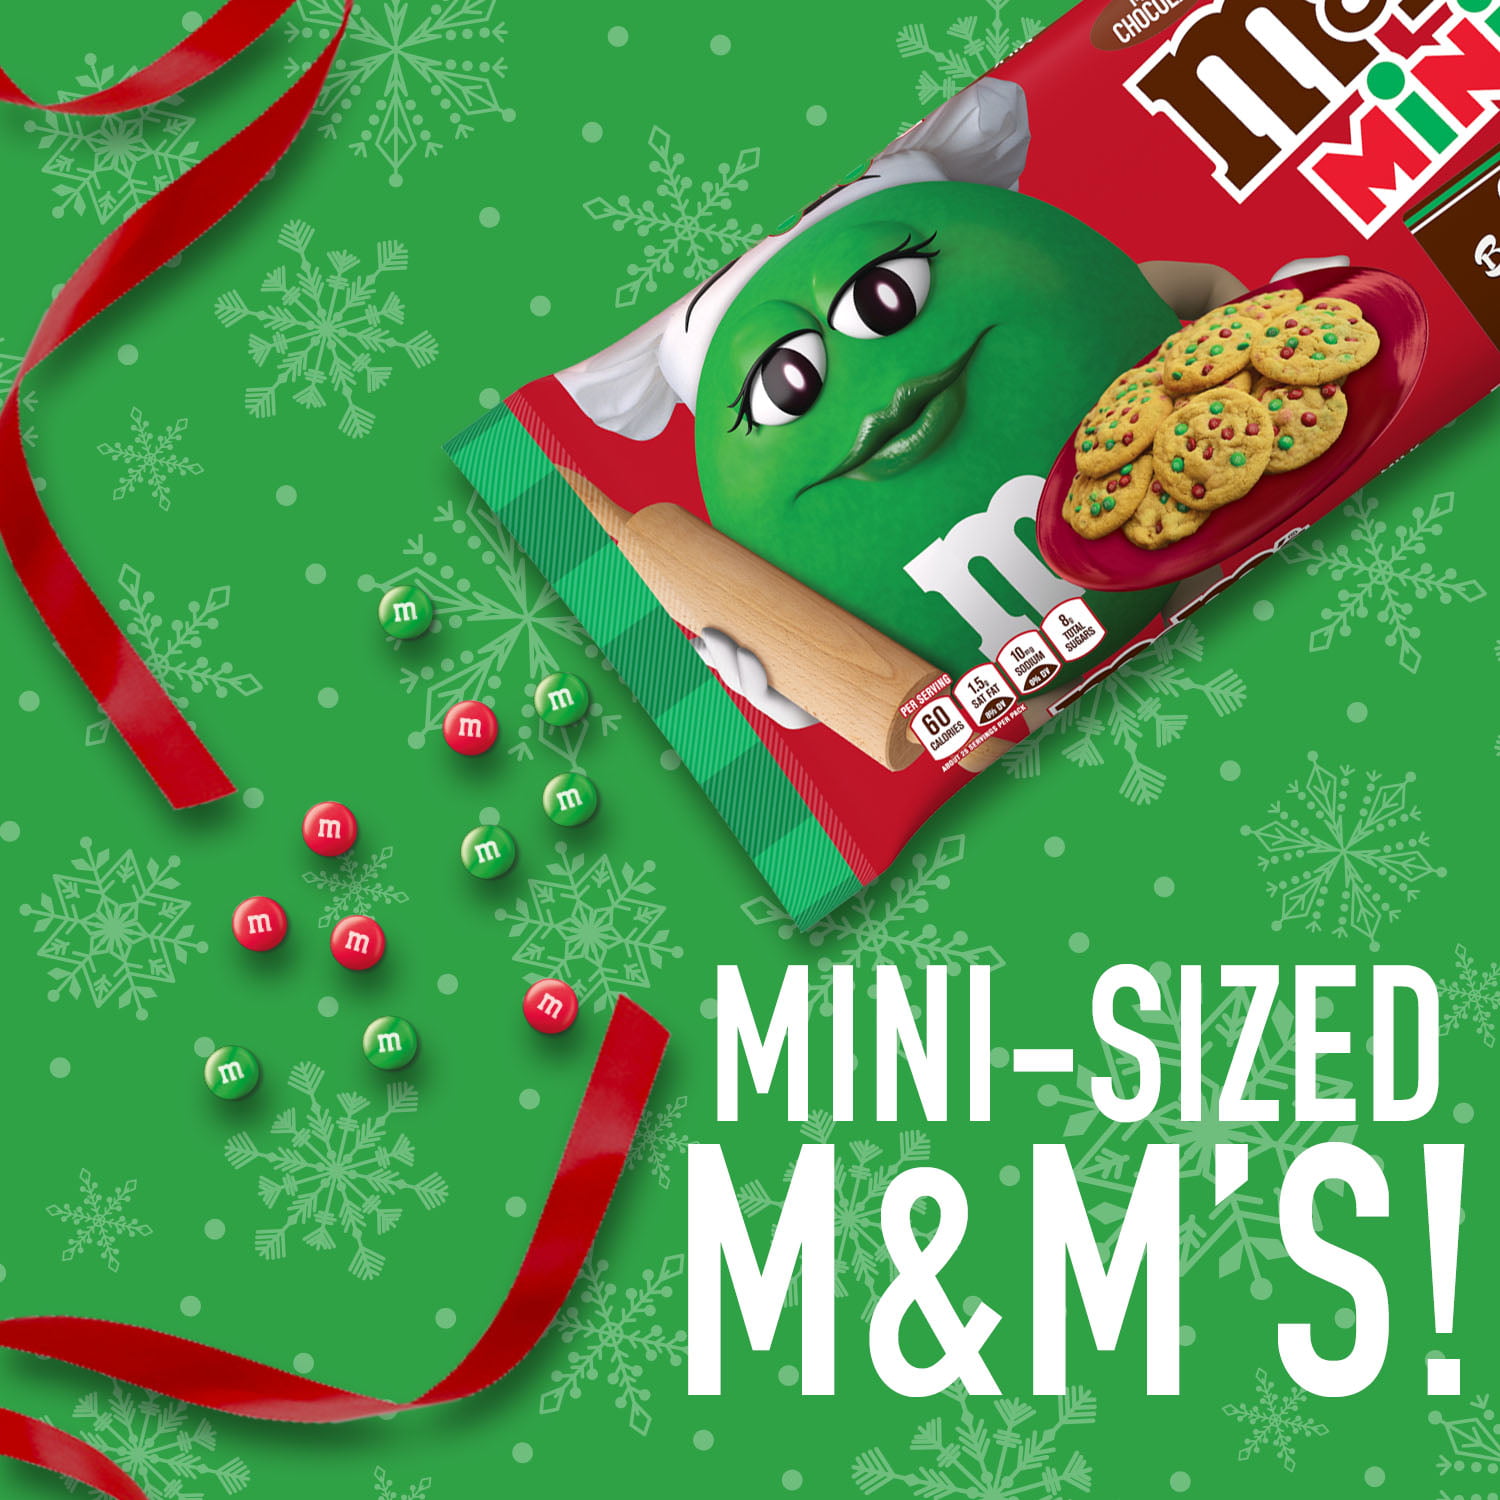 M&M's Minis Milk Chocolate Christmas Candy, Sharing Size - 10.1 oz Bag 